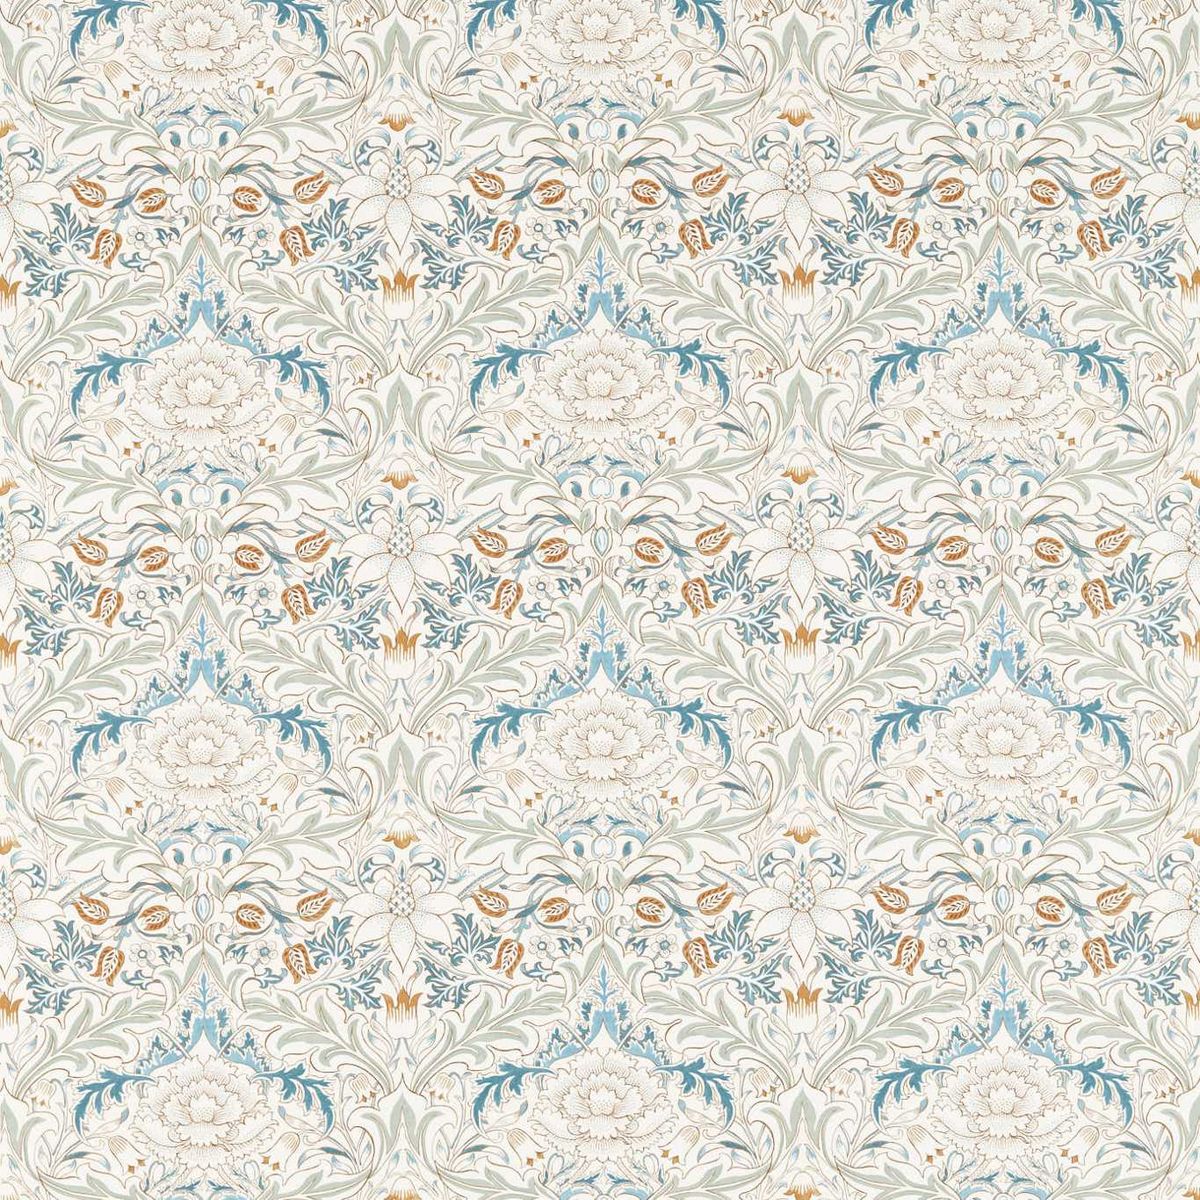 Simply Severn Bayleaf/Annatto Fabric by William Morris & Co.